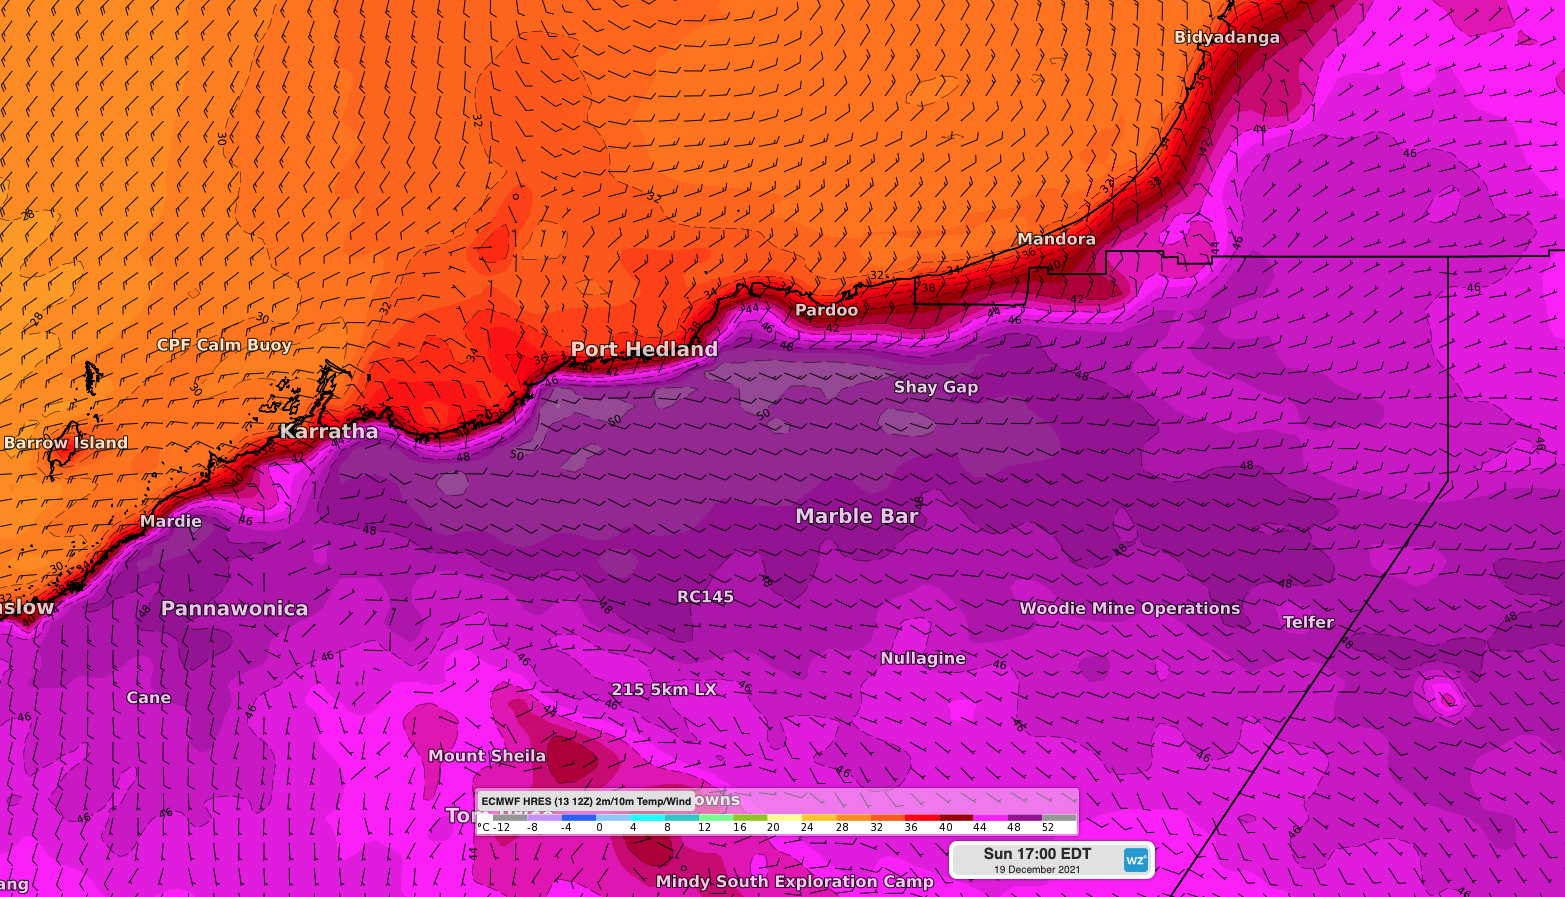 Port Hedland is forecast to reach 47ºC on Sunday.